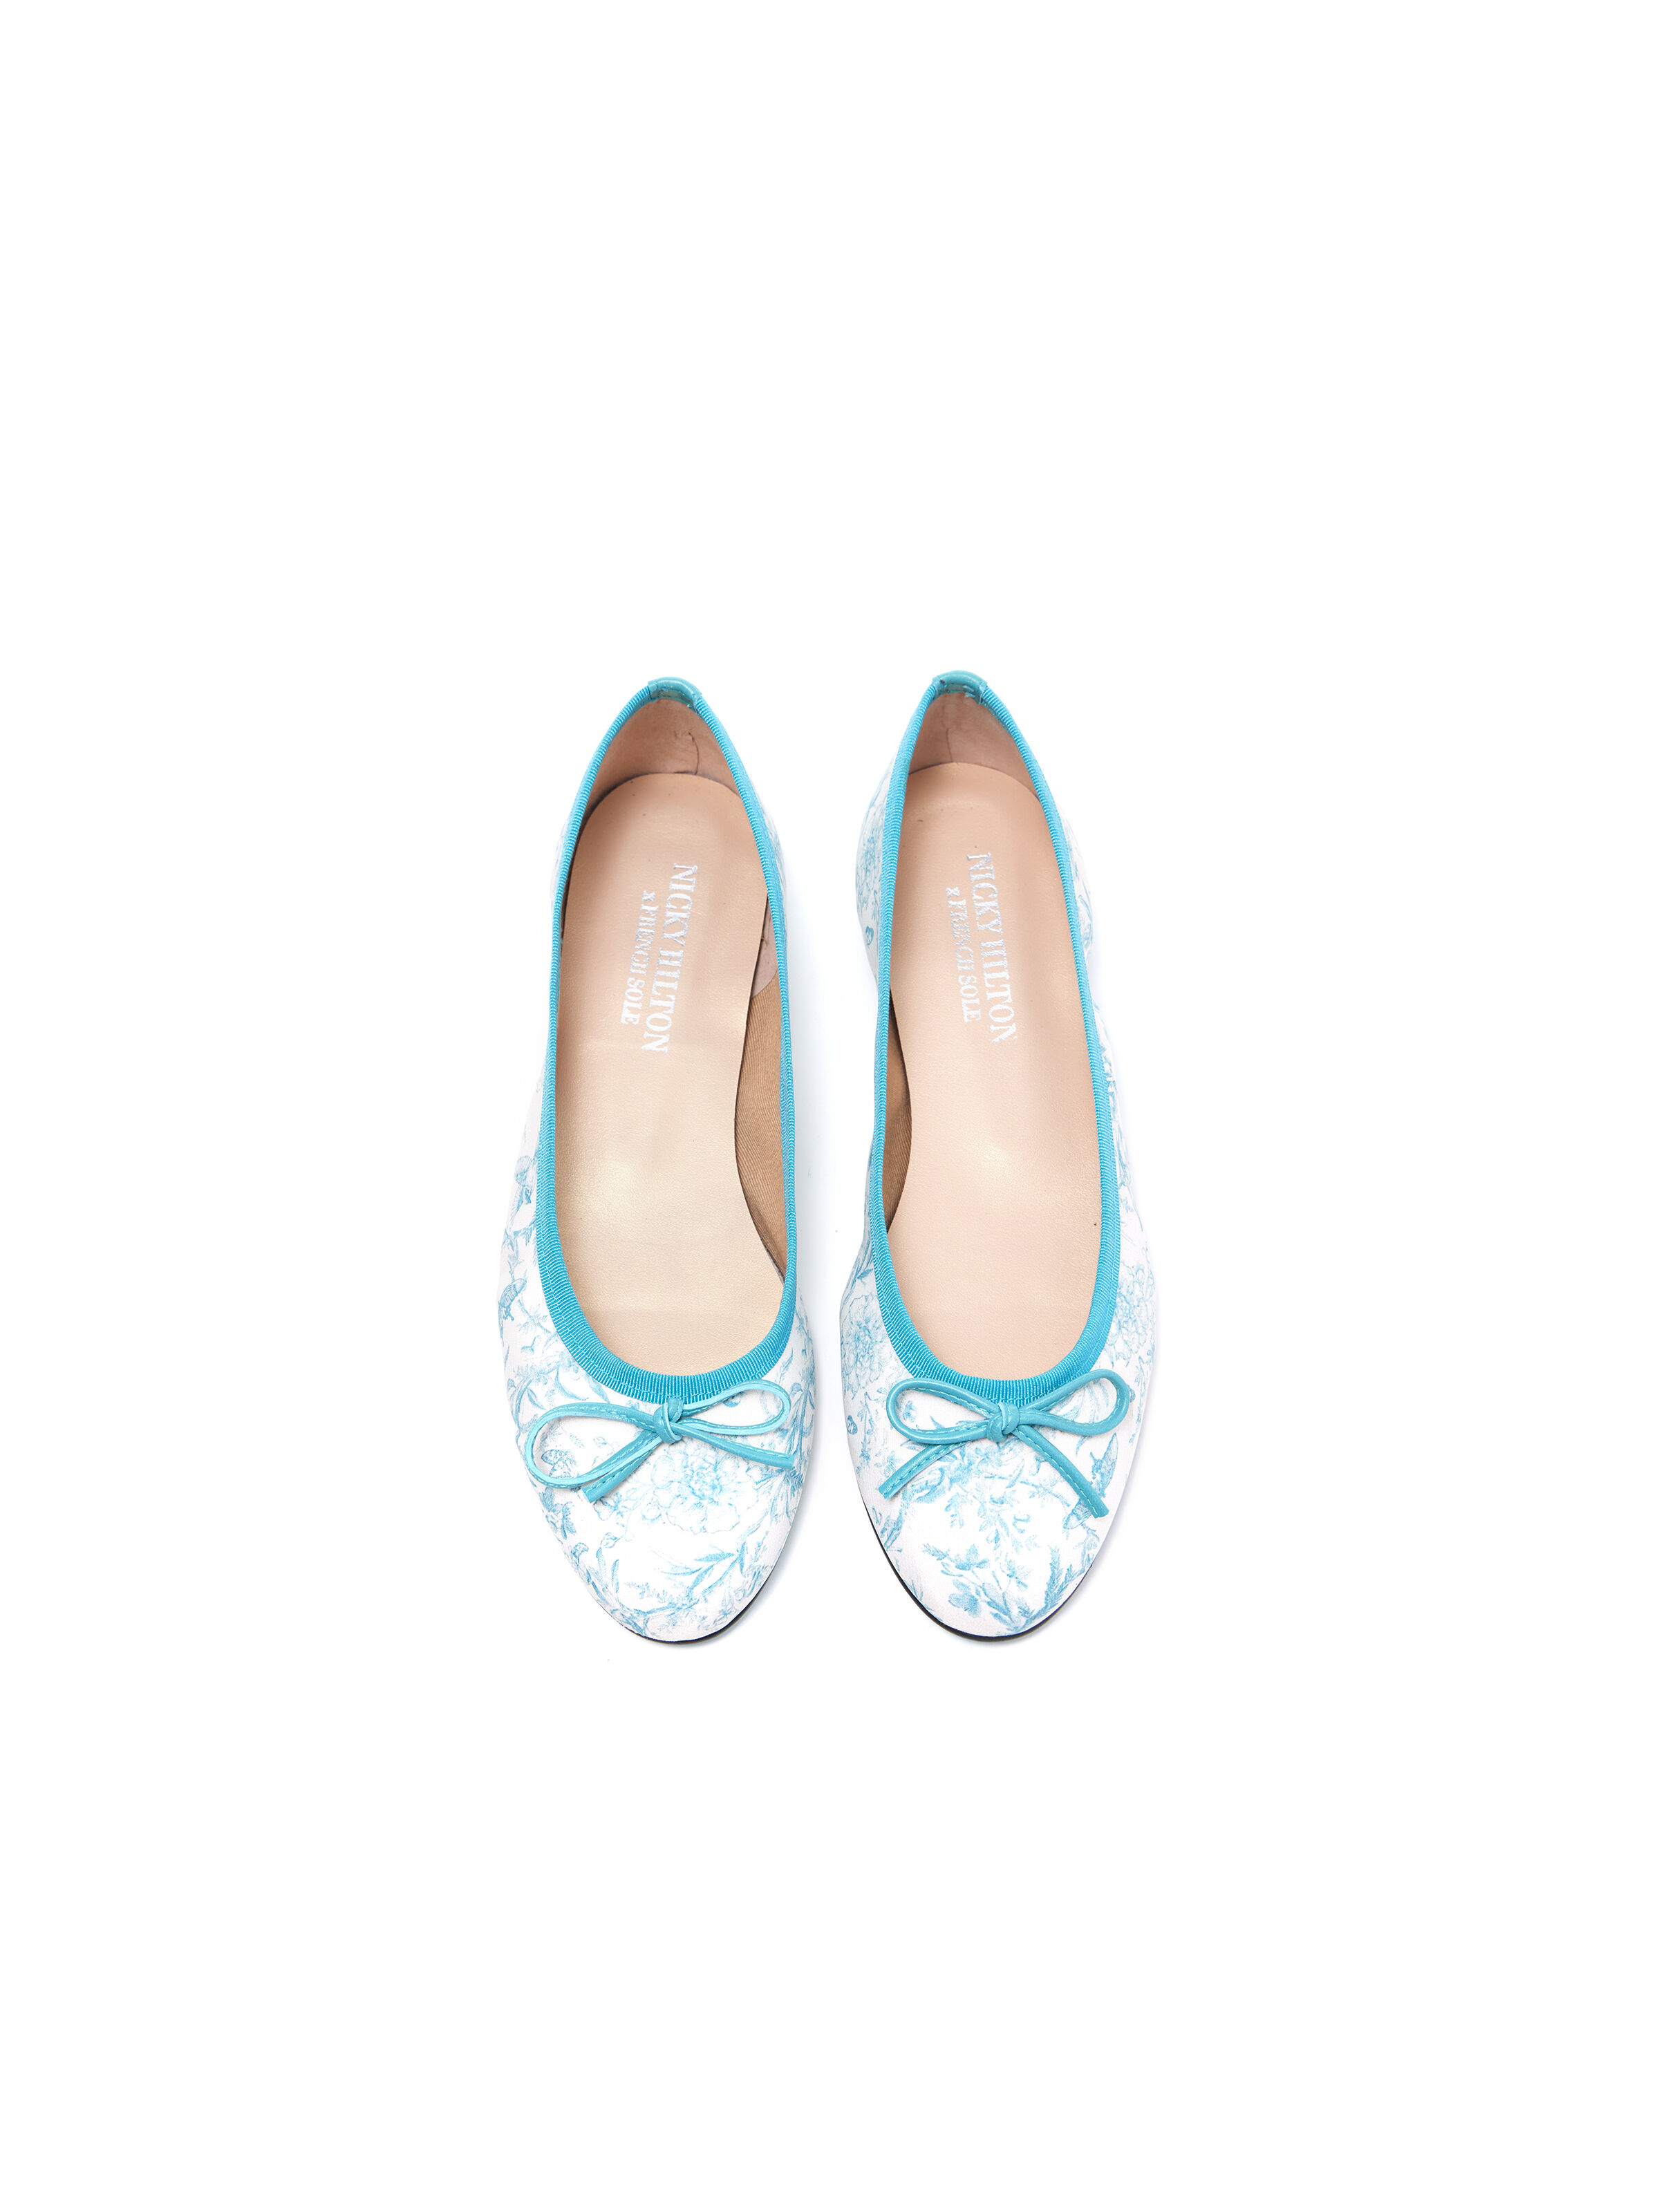 Women's Designer Shoes | Alice + Olivia